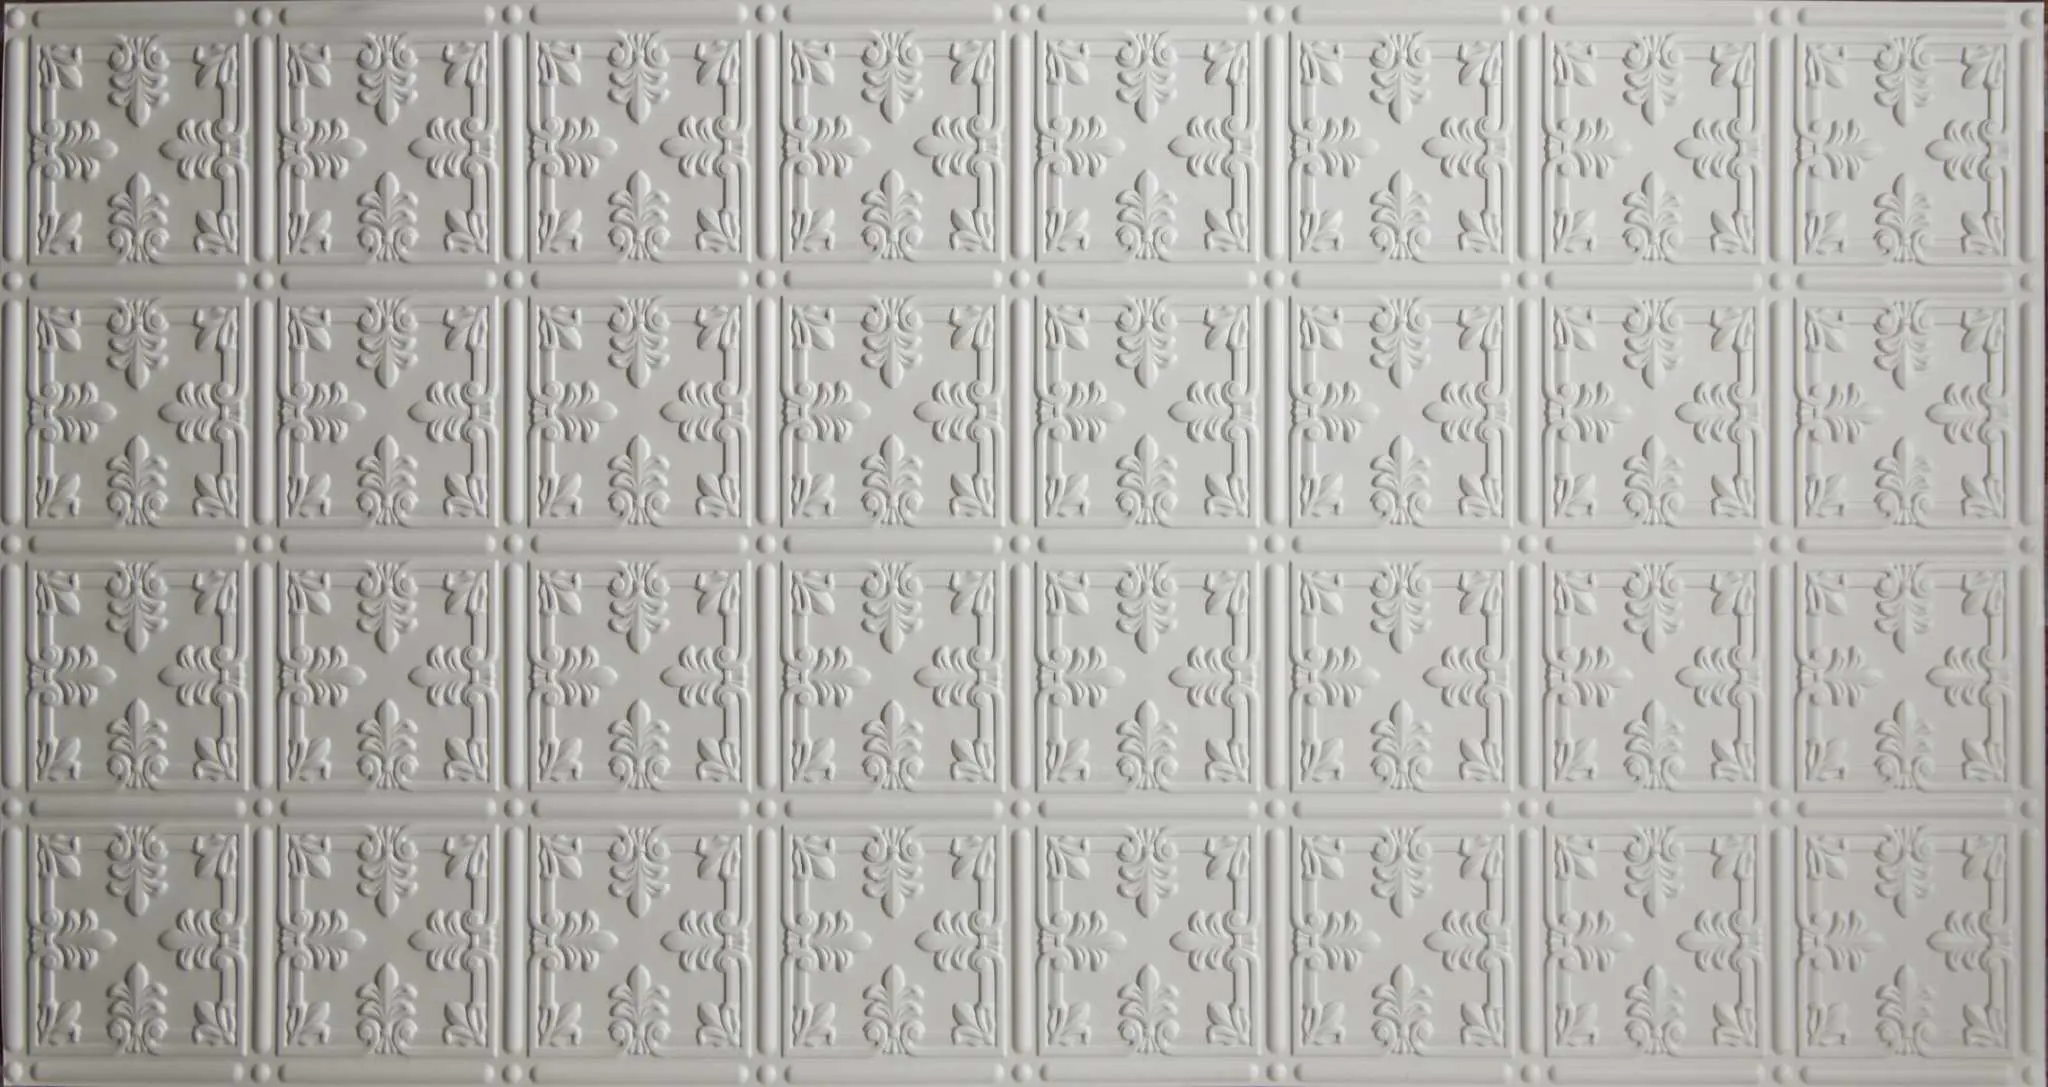 2'x4' faux tin ceiling tile